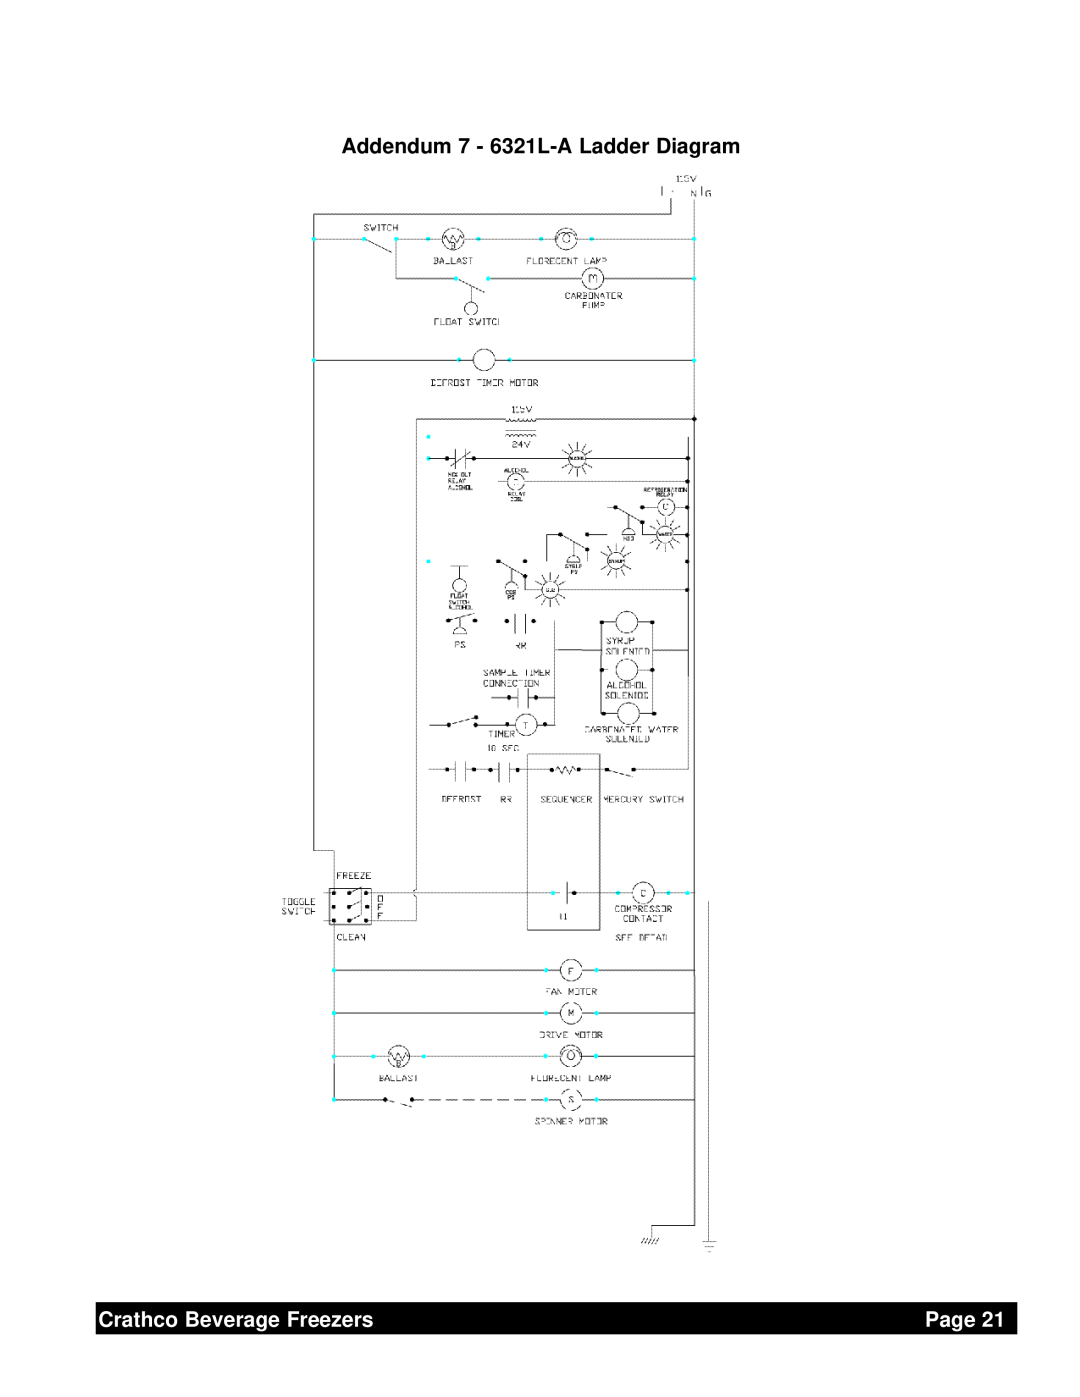 Grindmaster service manual Addendum 7 - 6321L-A Ladder Diagram, Crathco Beverage Freezers, Page 